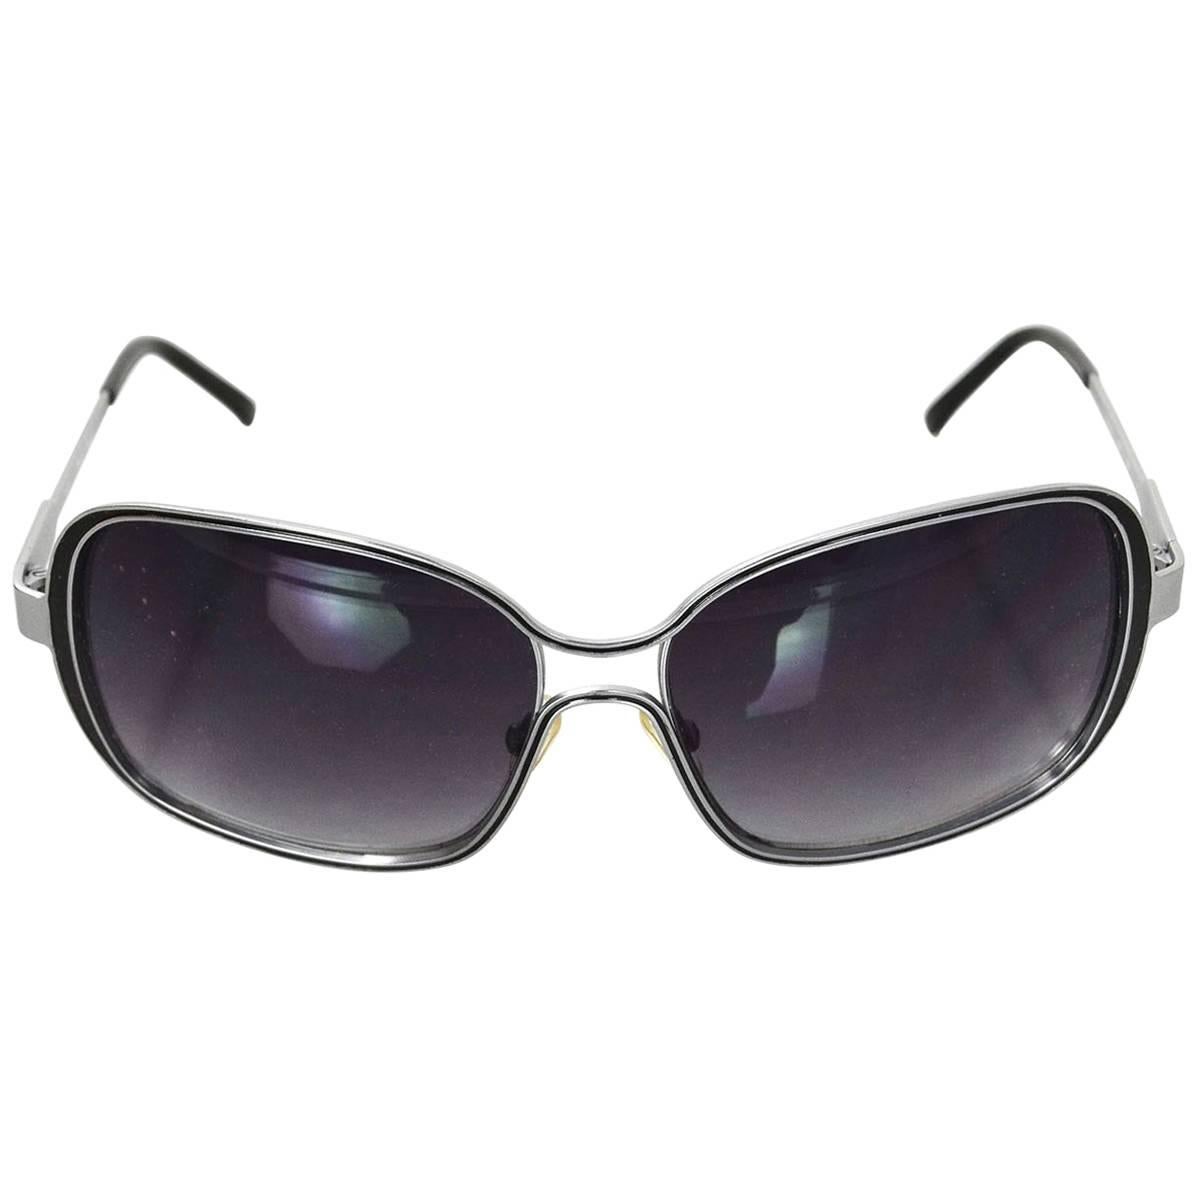 Chloe Silver Frame Sunglasses